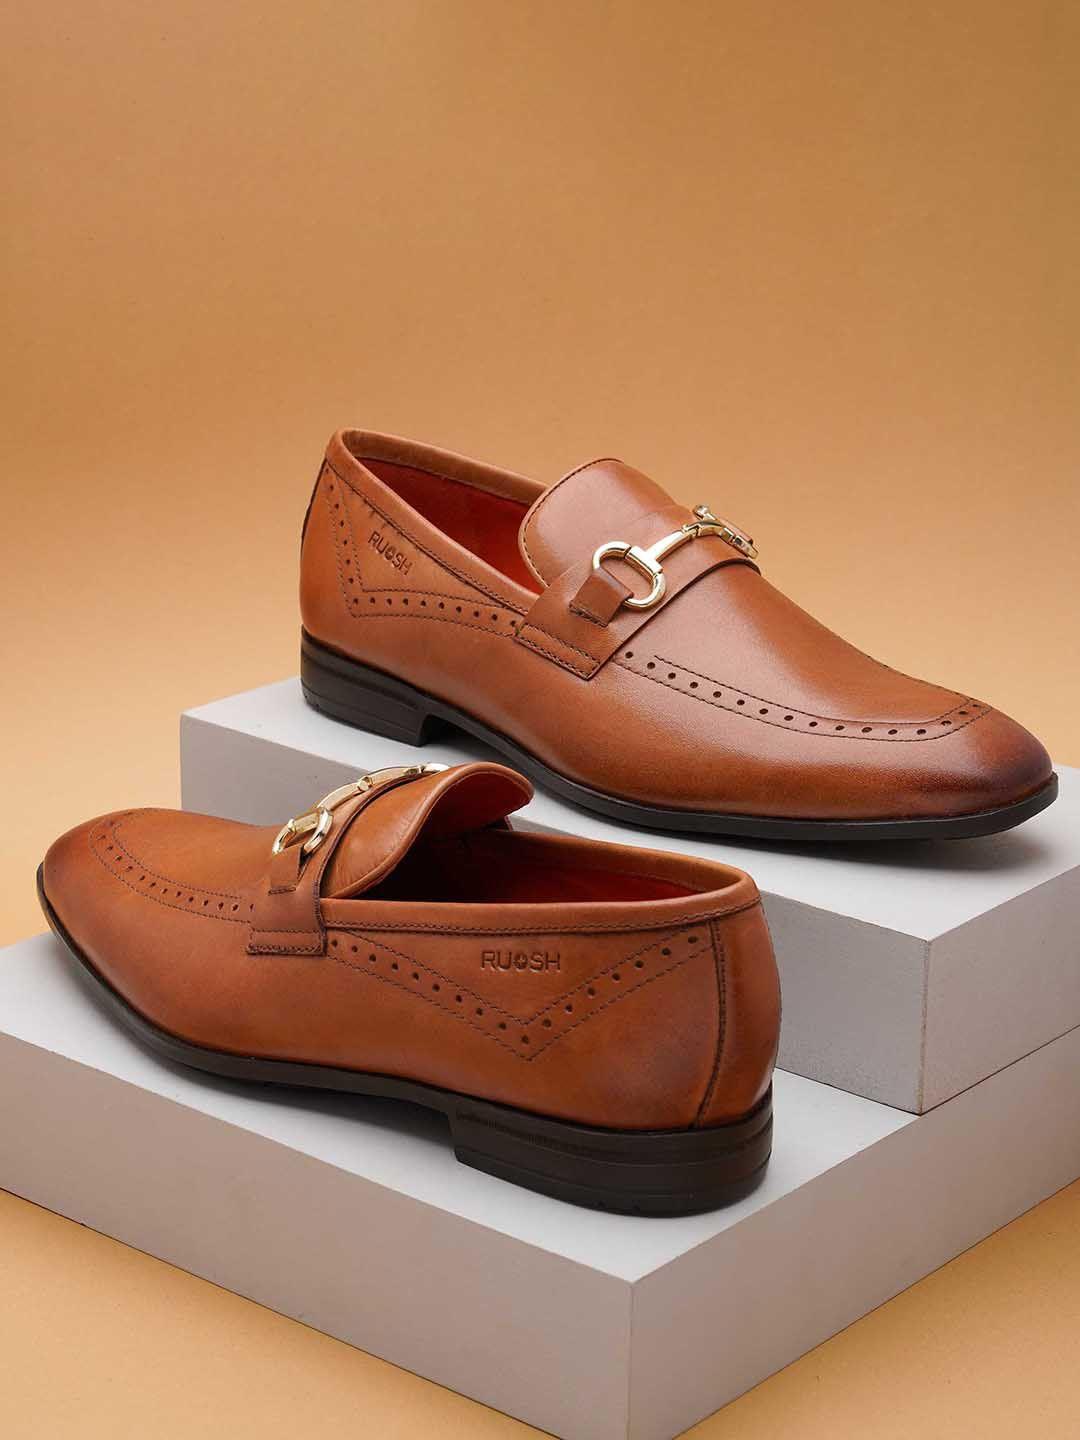 ruosh-men-textured-leather-formal-horsebit-loafers